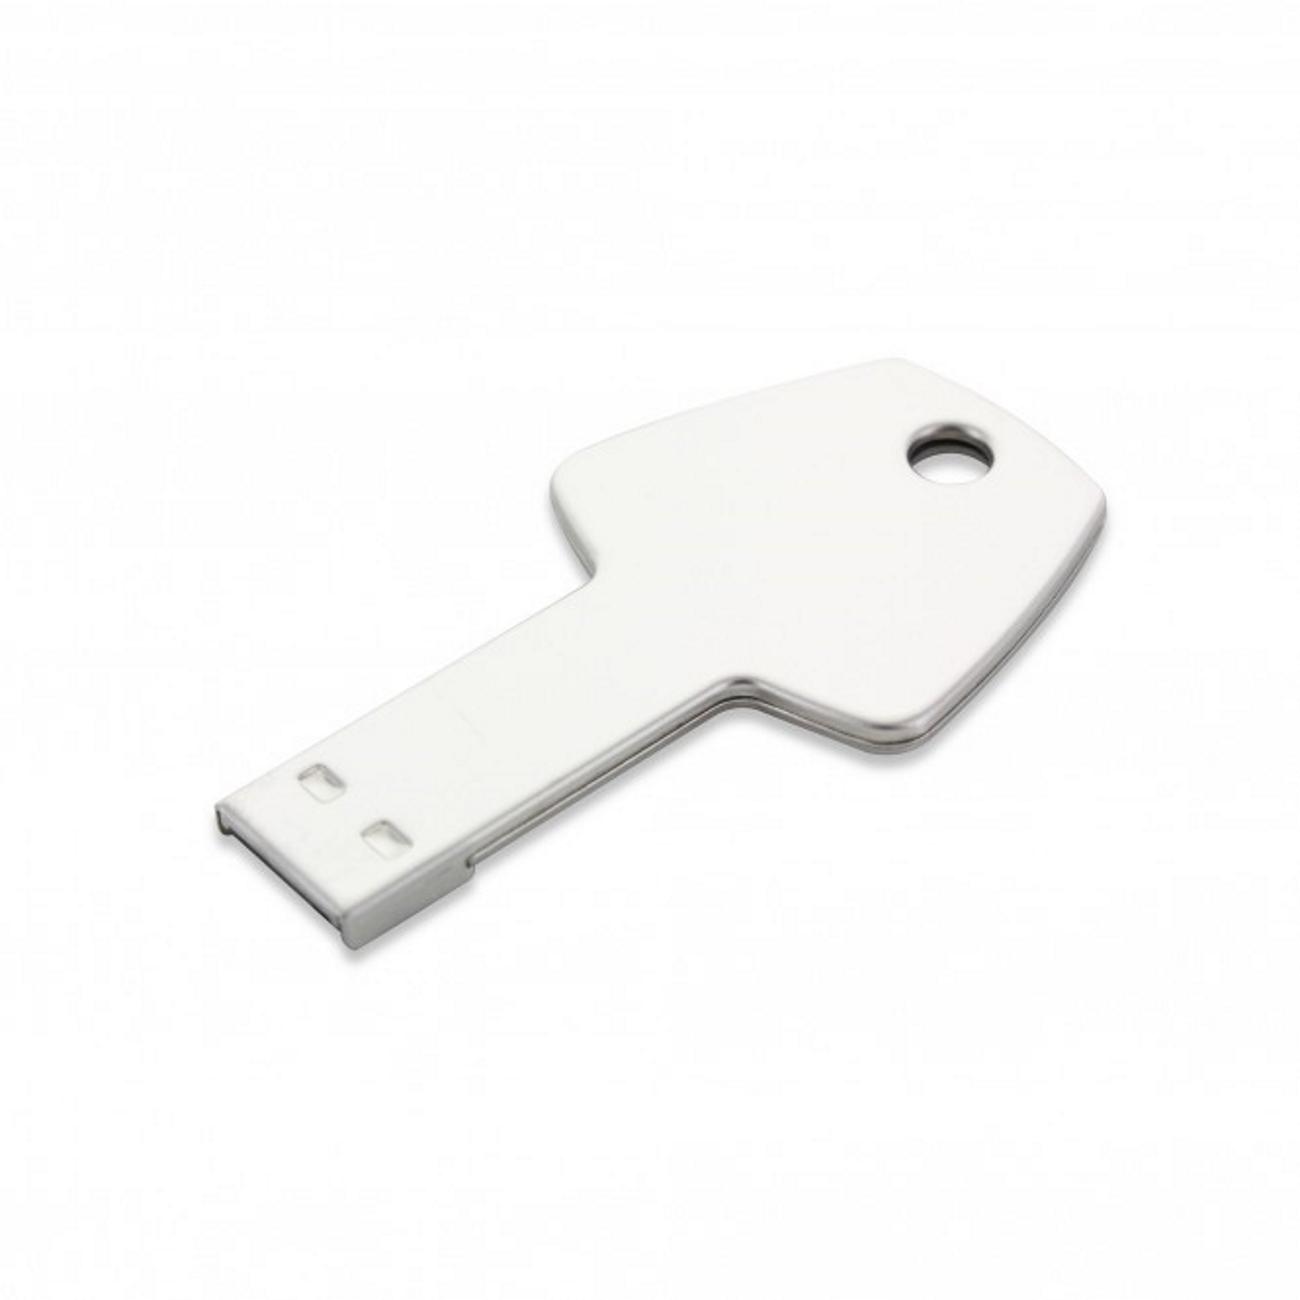 USB GERMANY ®Schlüssel Key (Silber, USB-Stick GB) 8